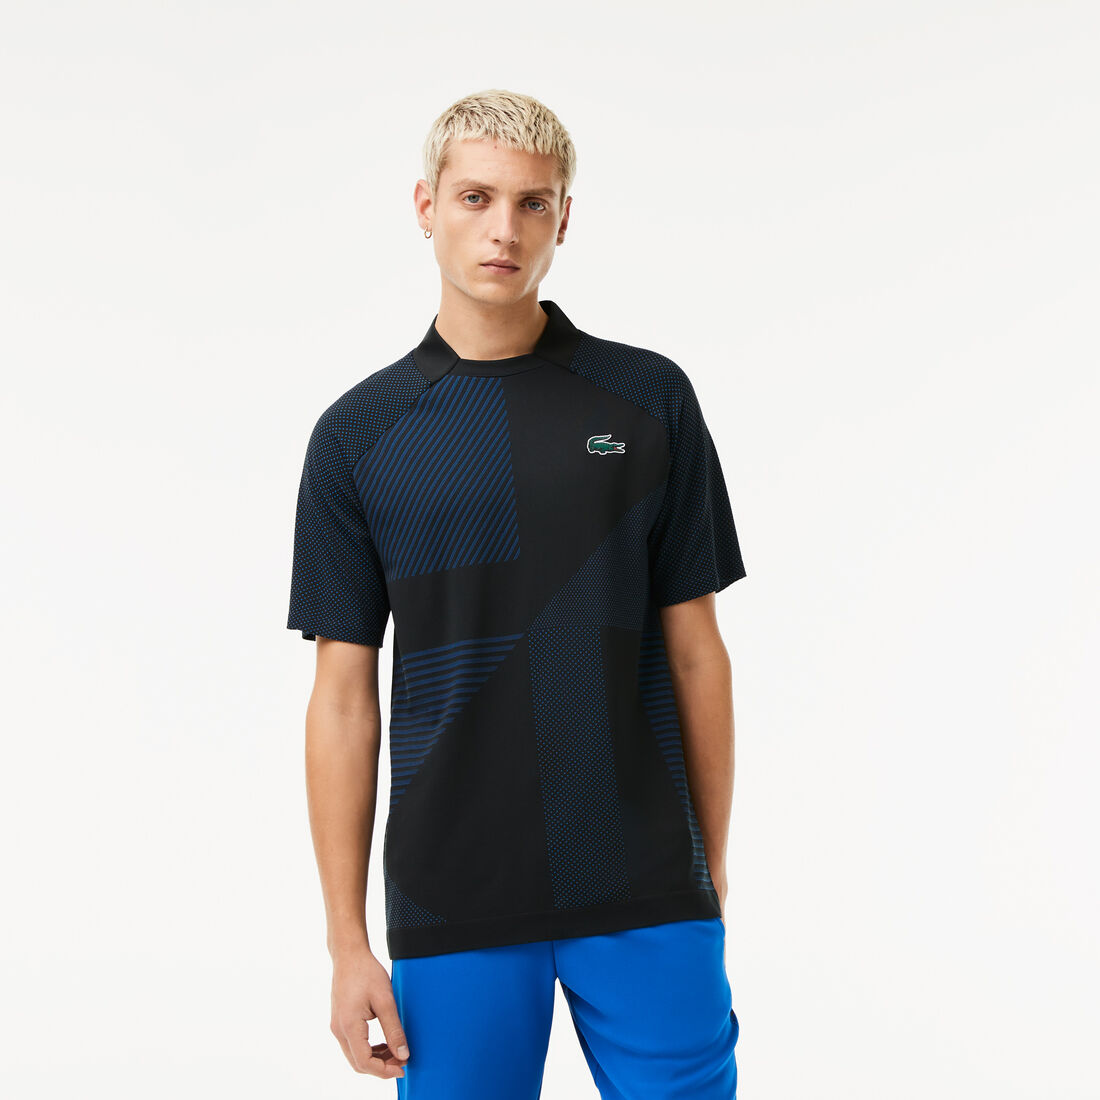 Men's Lacoste SPORT Slim Fit Seamless Tennis Polo Shirt - DH9255-00-985